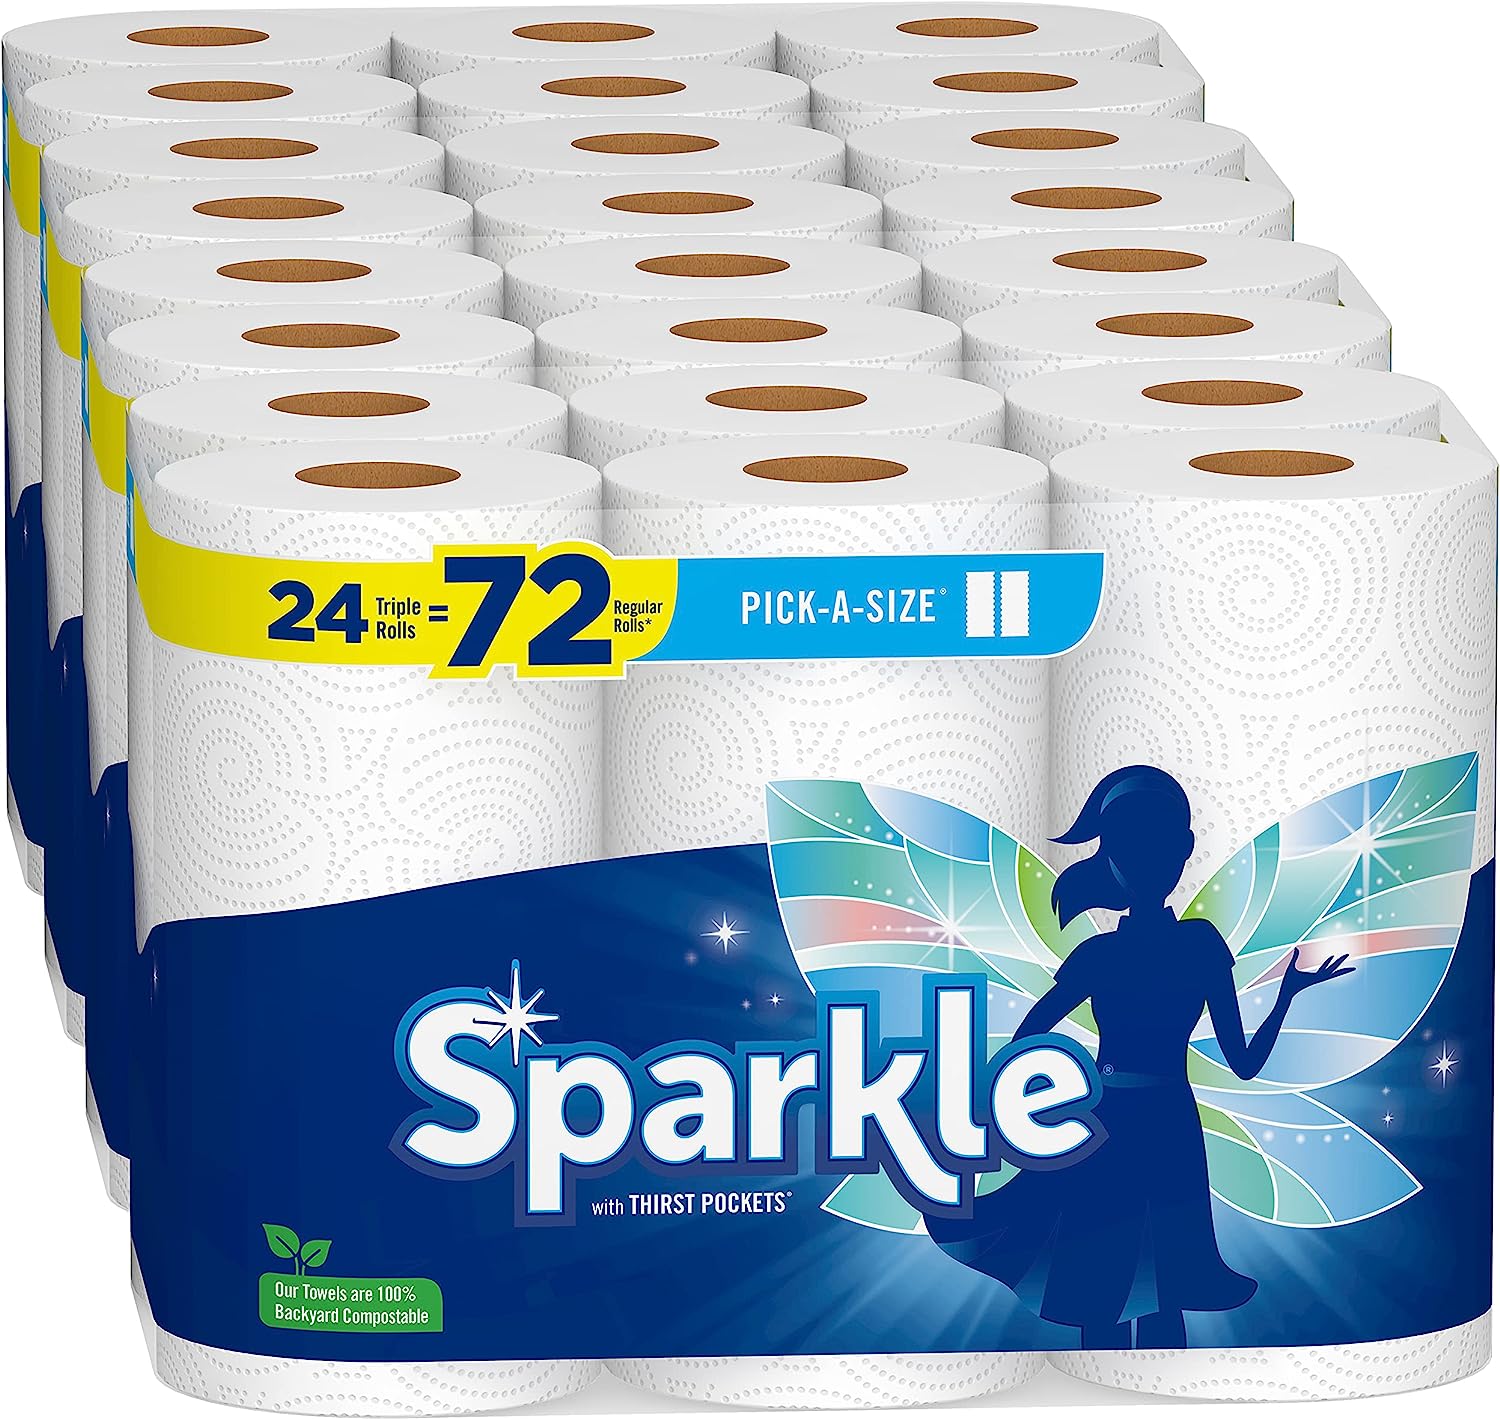 Sparkle® Pick-A-Size® Paper Towels, 24 Triple Rolls = 72 Regular Rolls